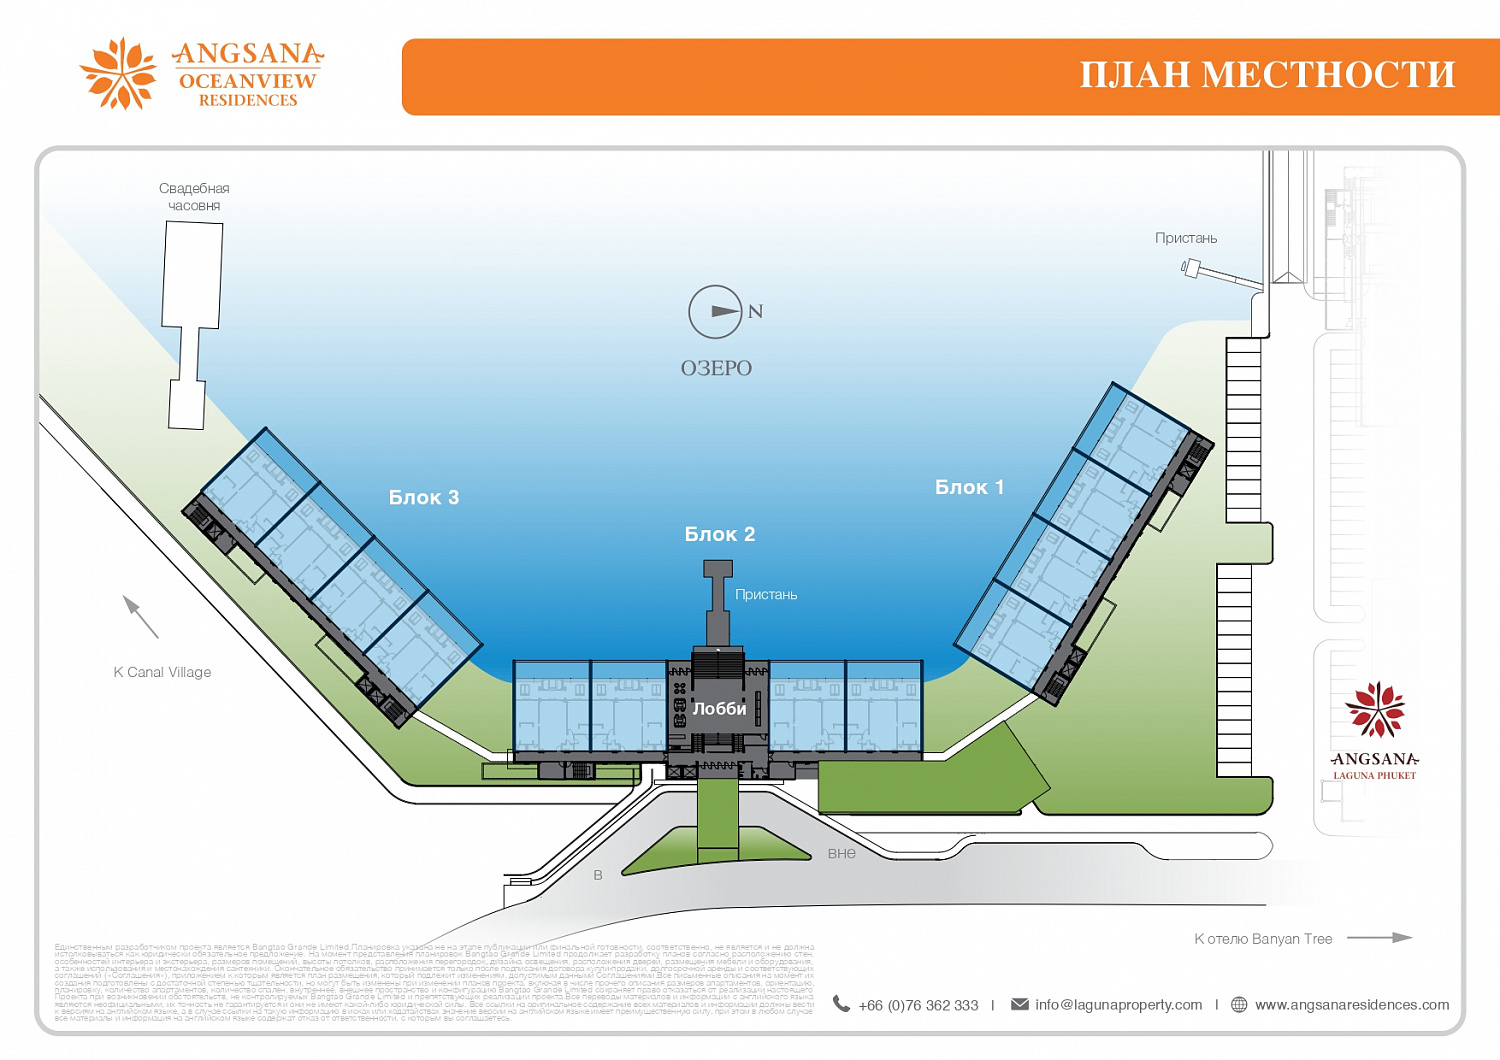 Angsana Oceanview Residences